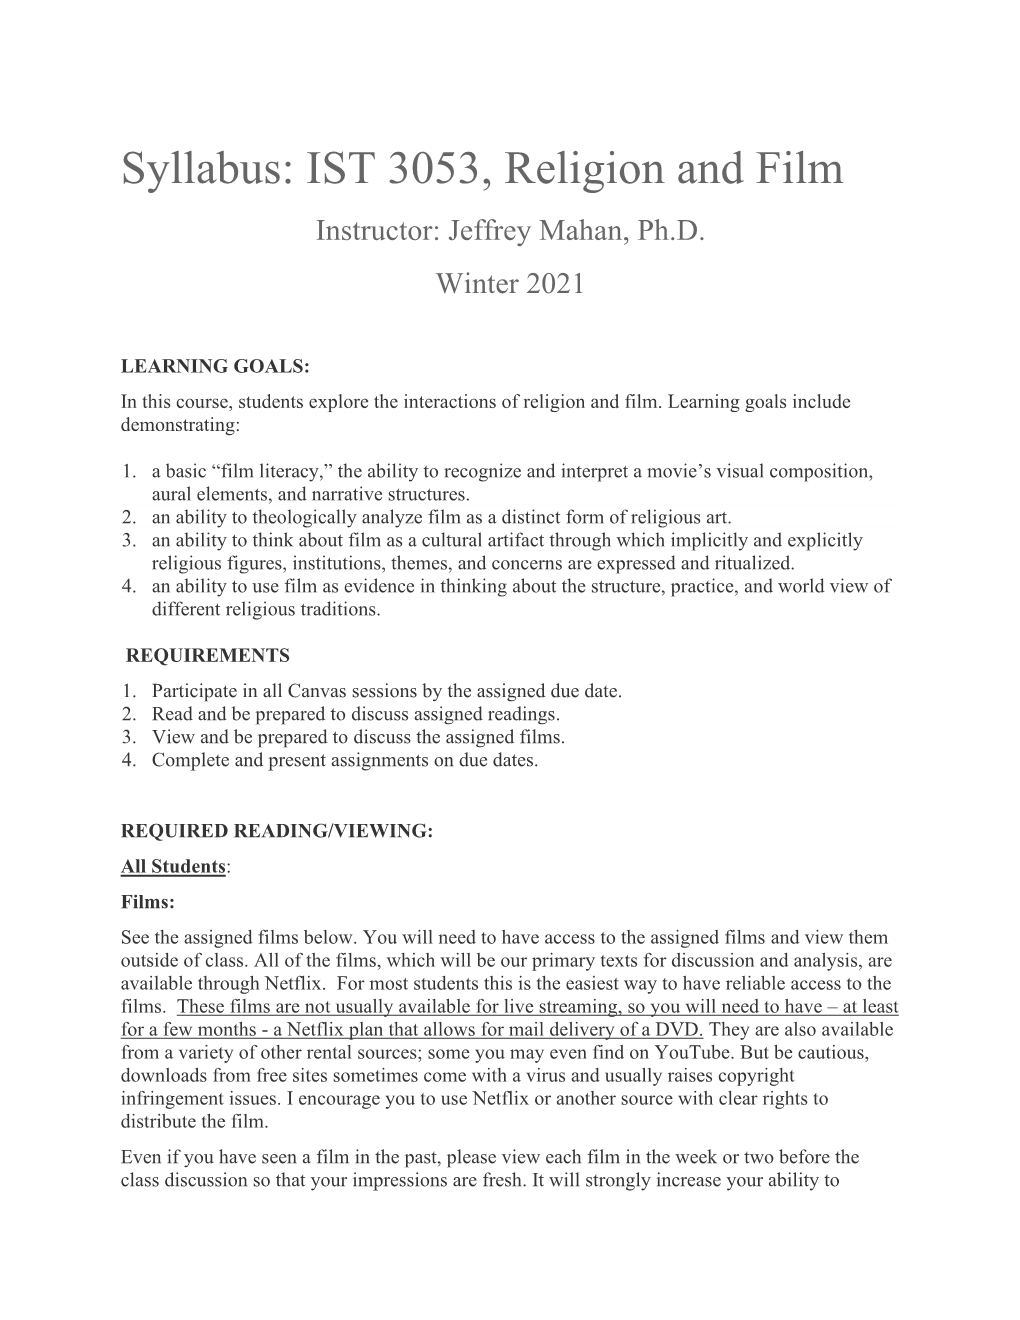 Syllabus: IST 3053, Religion and Film Instructor: Jeffrey Mahan, Ph.D